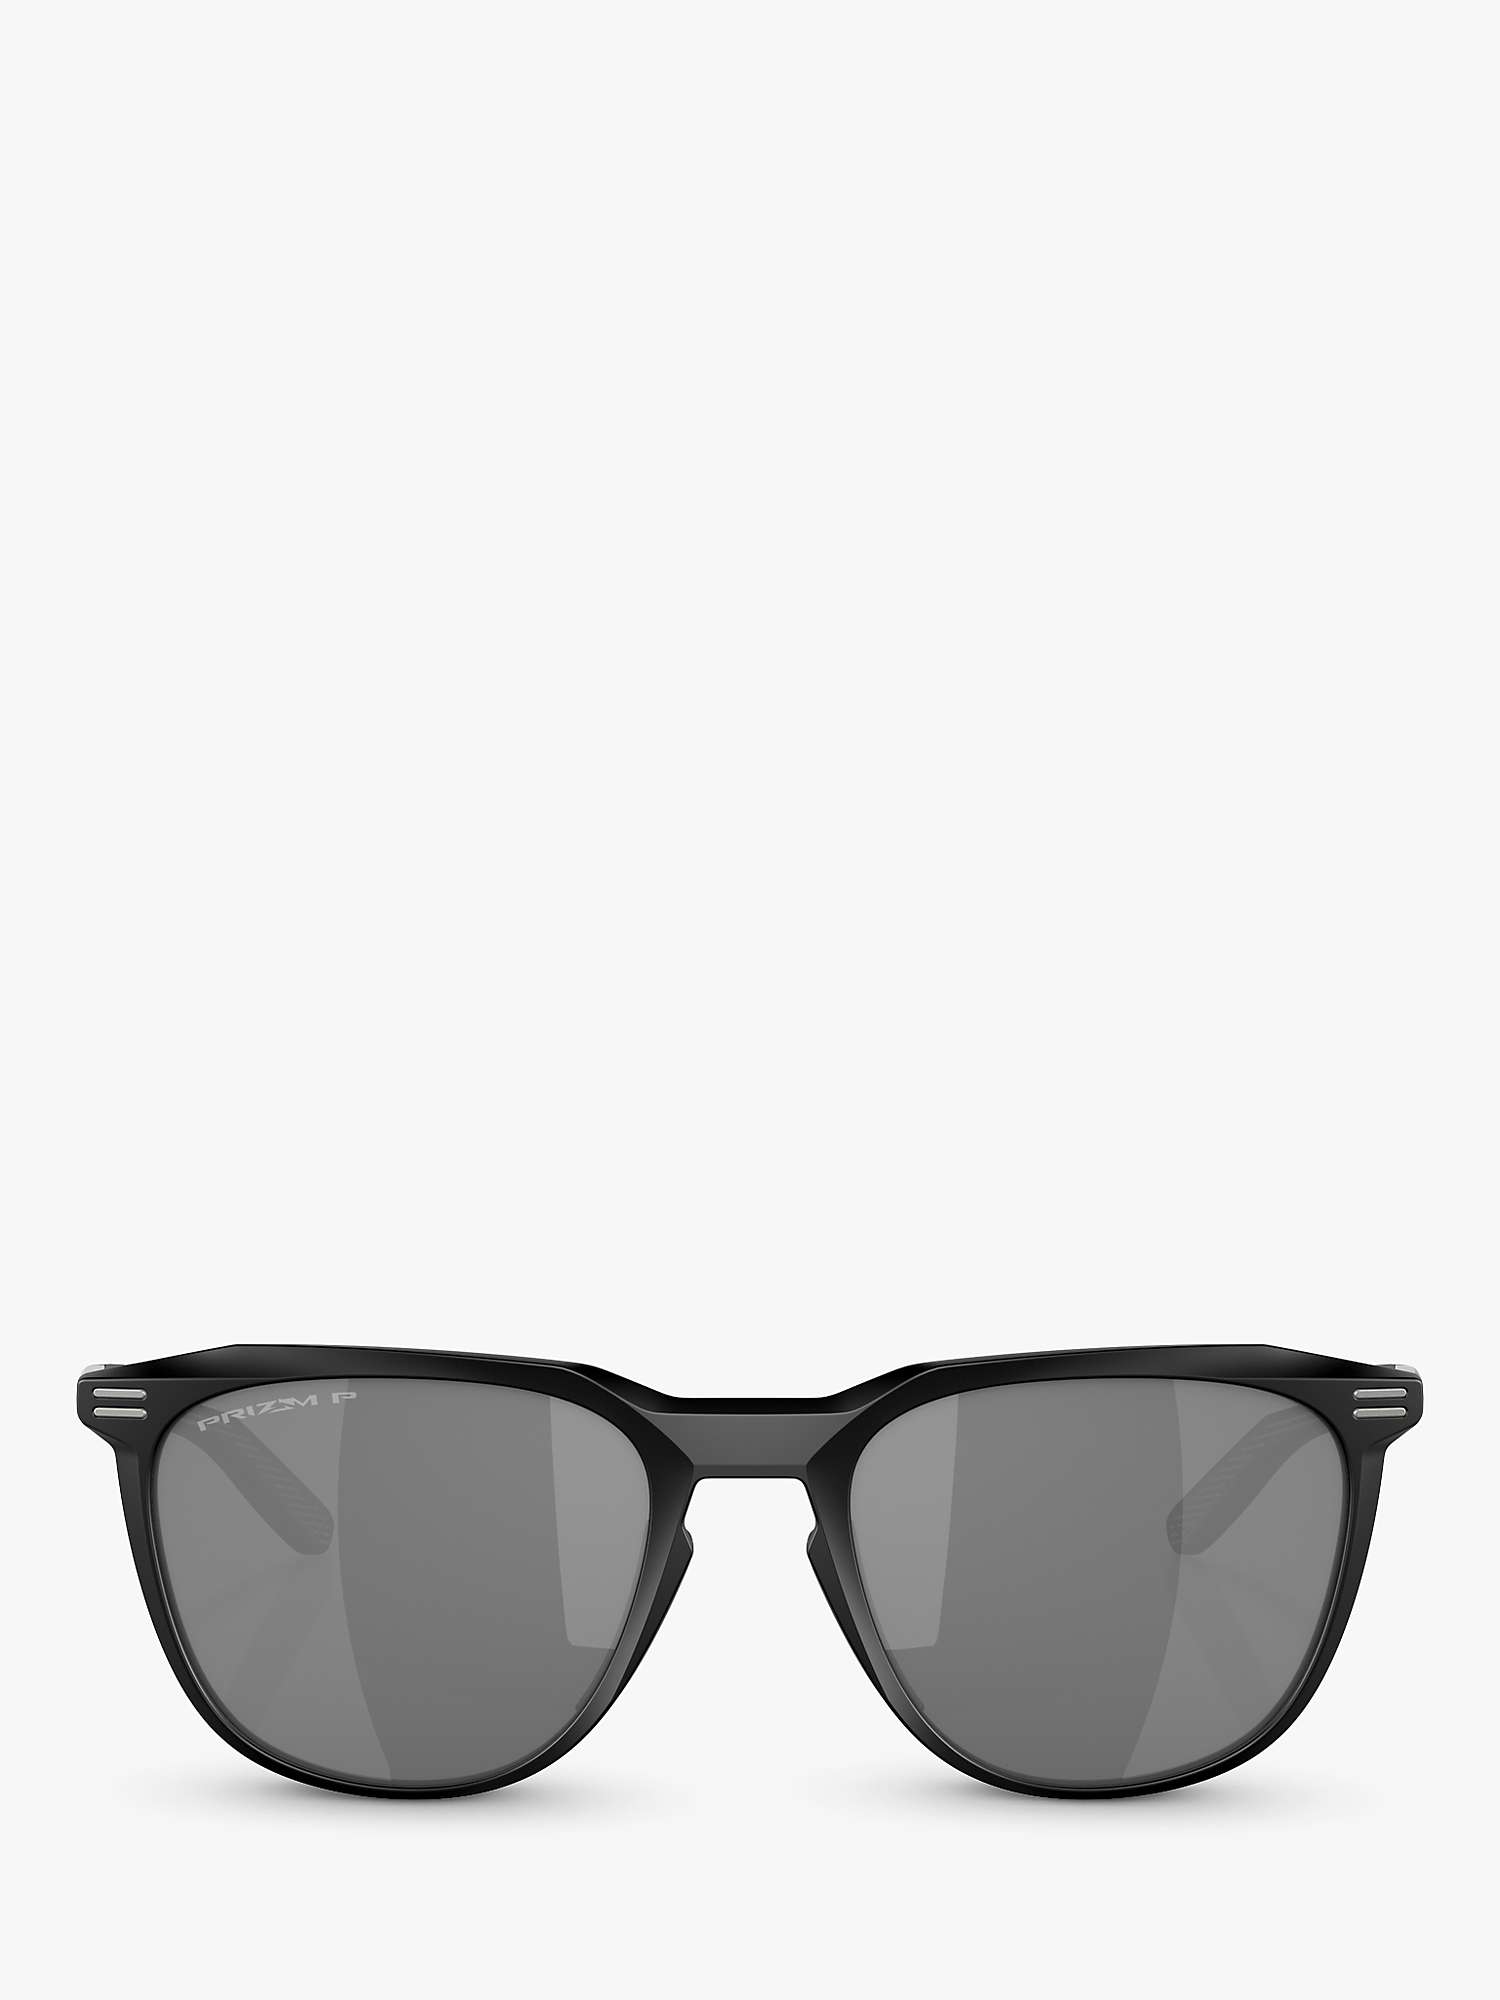 Buy Oakley OO9286 Men's Polarised D-Frame Sunglasses, Matte Black/Grey Online at johnlewis.com